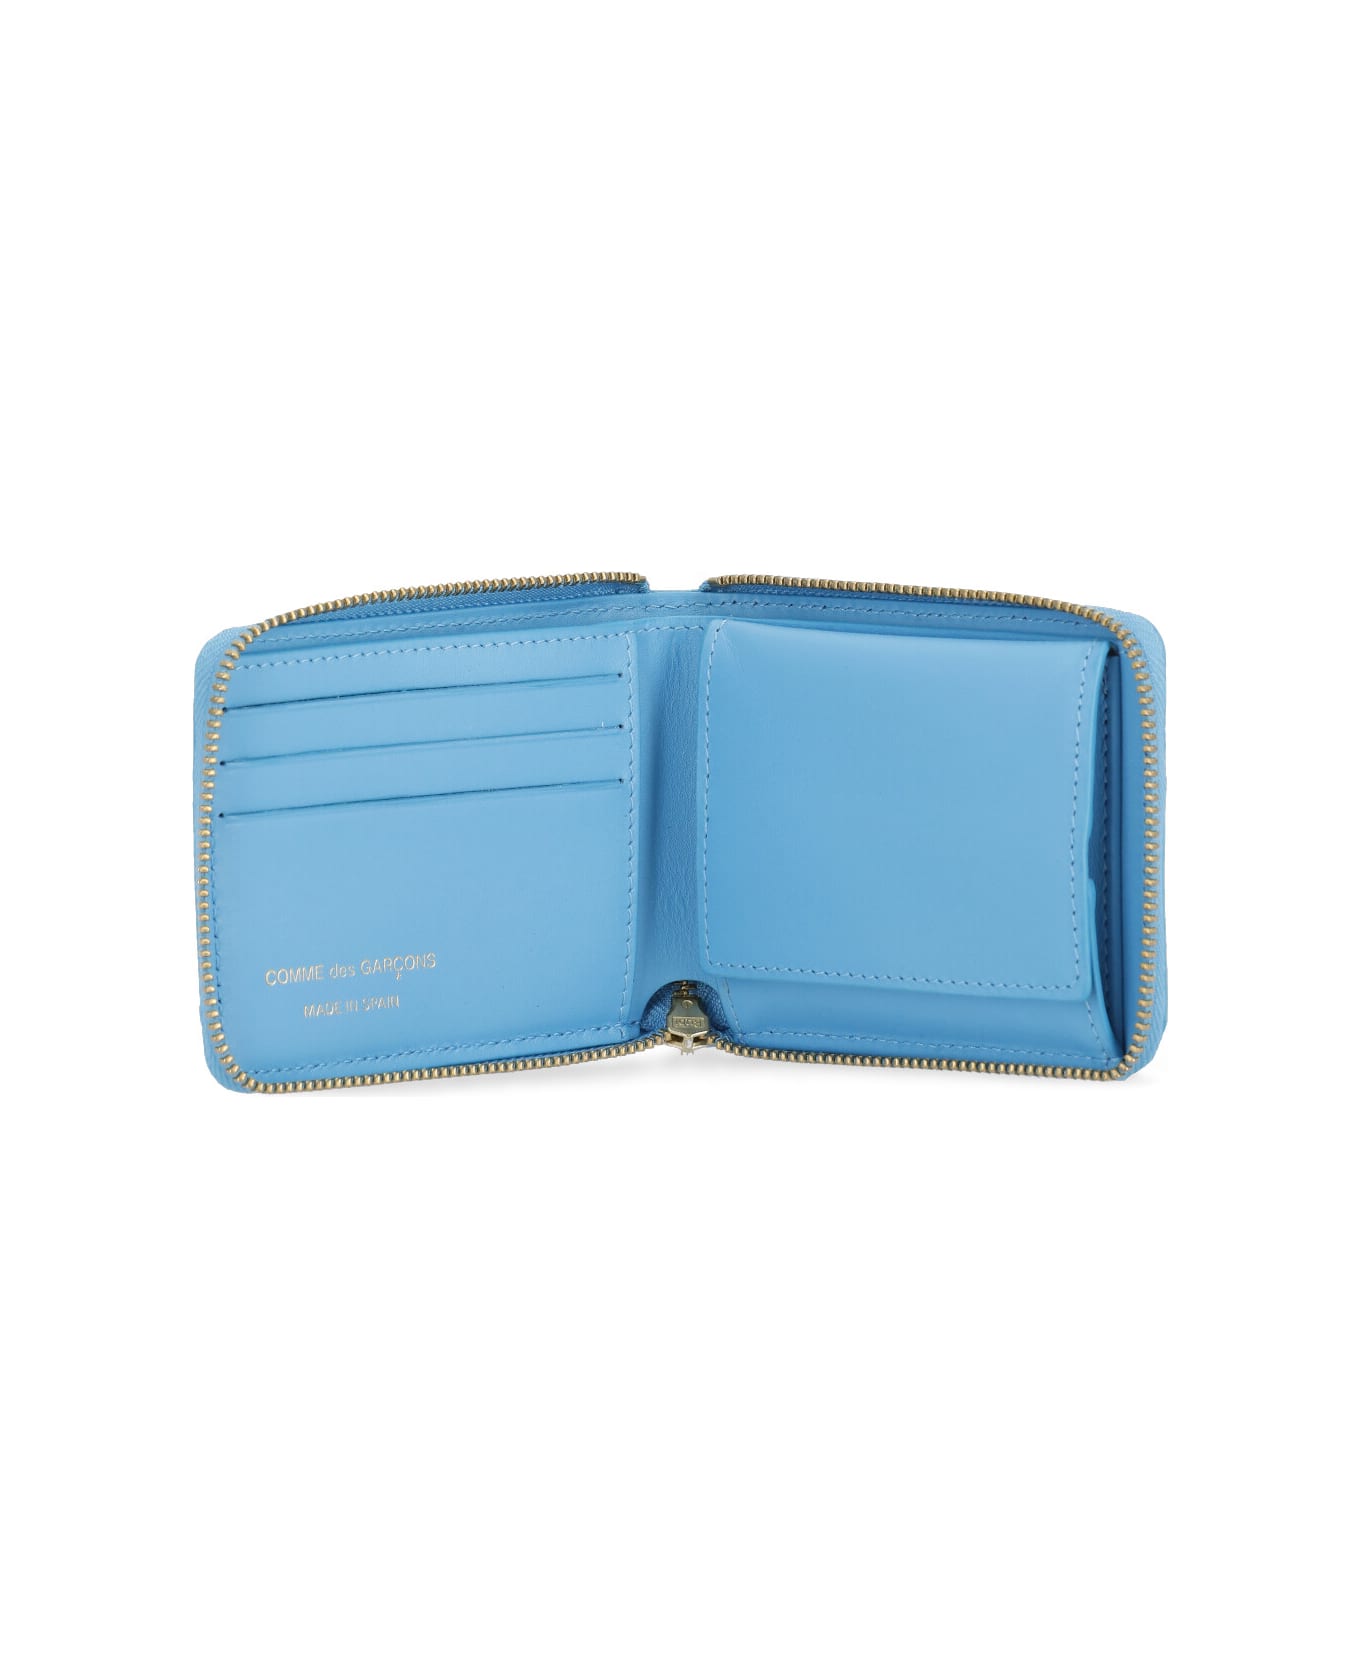 Comme des Garçons Wallet Smooth Leather Wallet - Light Blue 財布